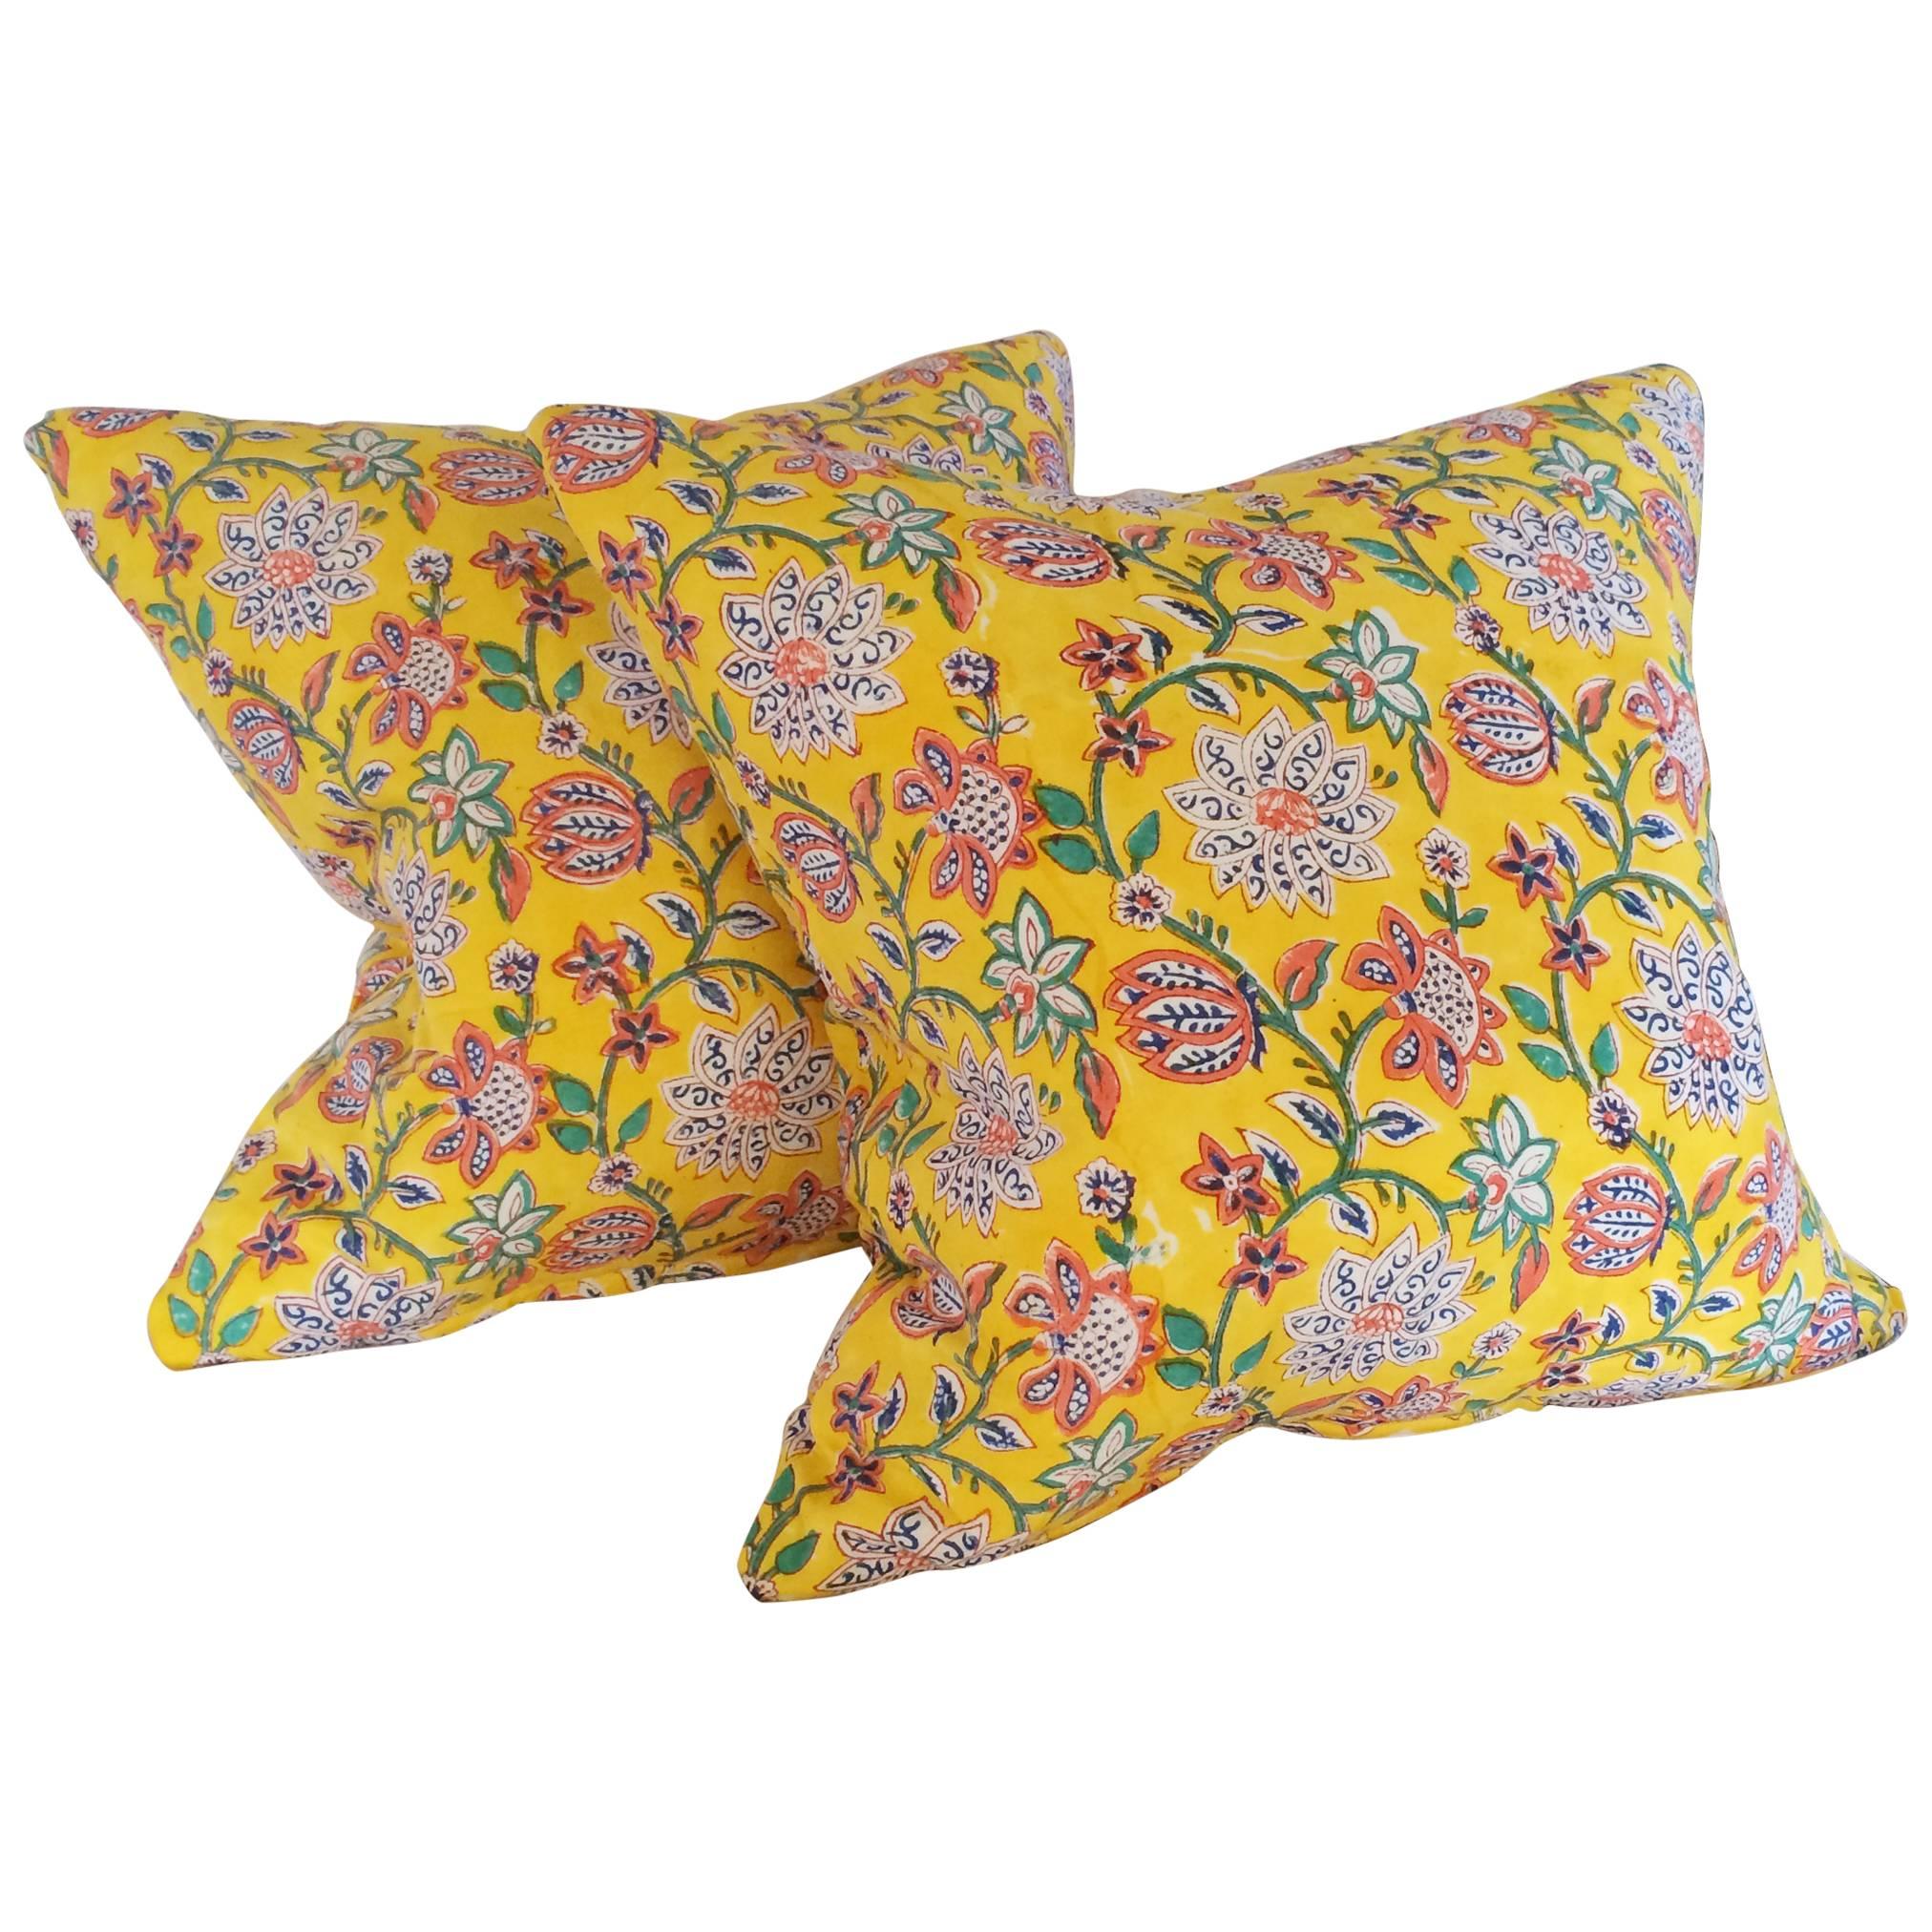 Pair of Indian Batik Floral Down Pillows